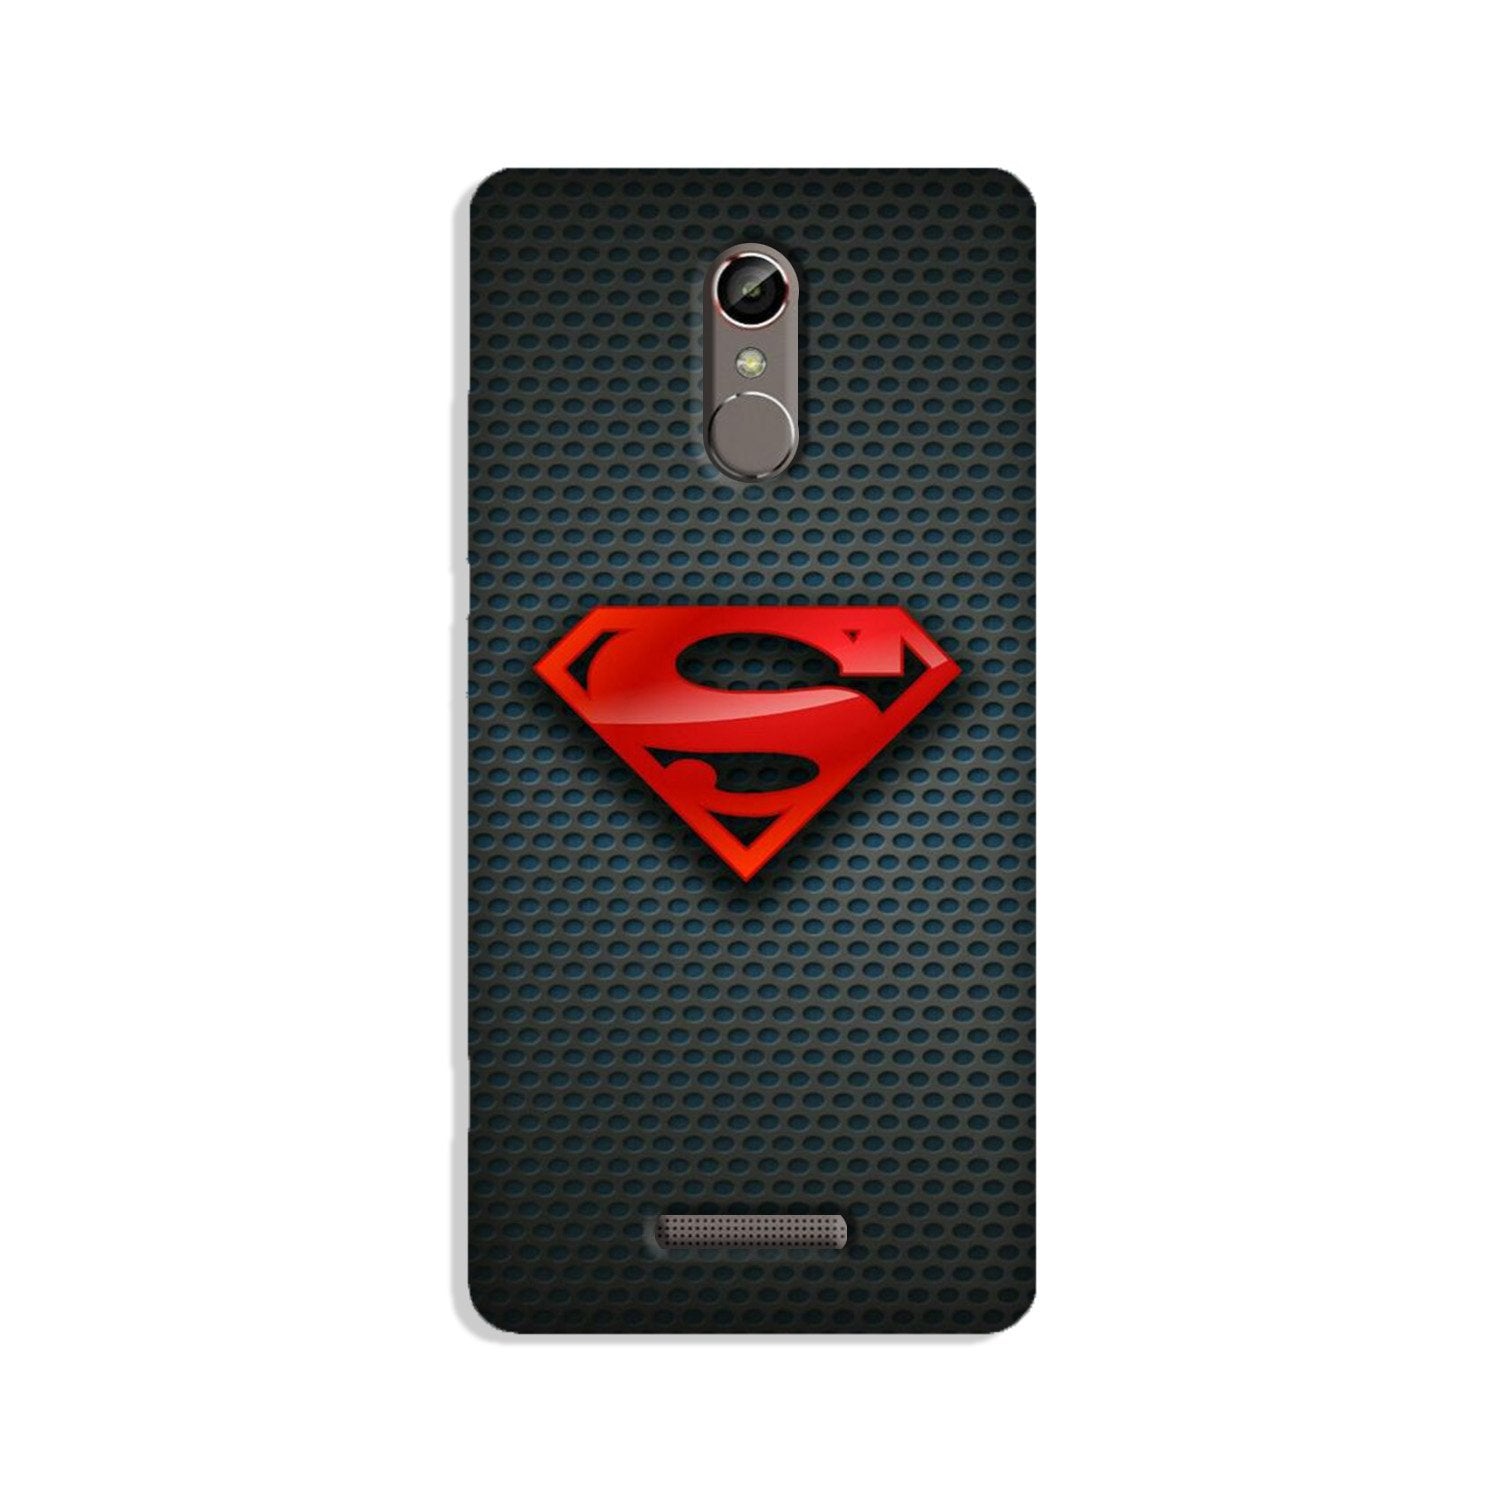 Superman Case for Gionee S6s (Design No. 247)